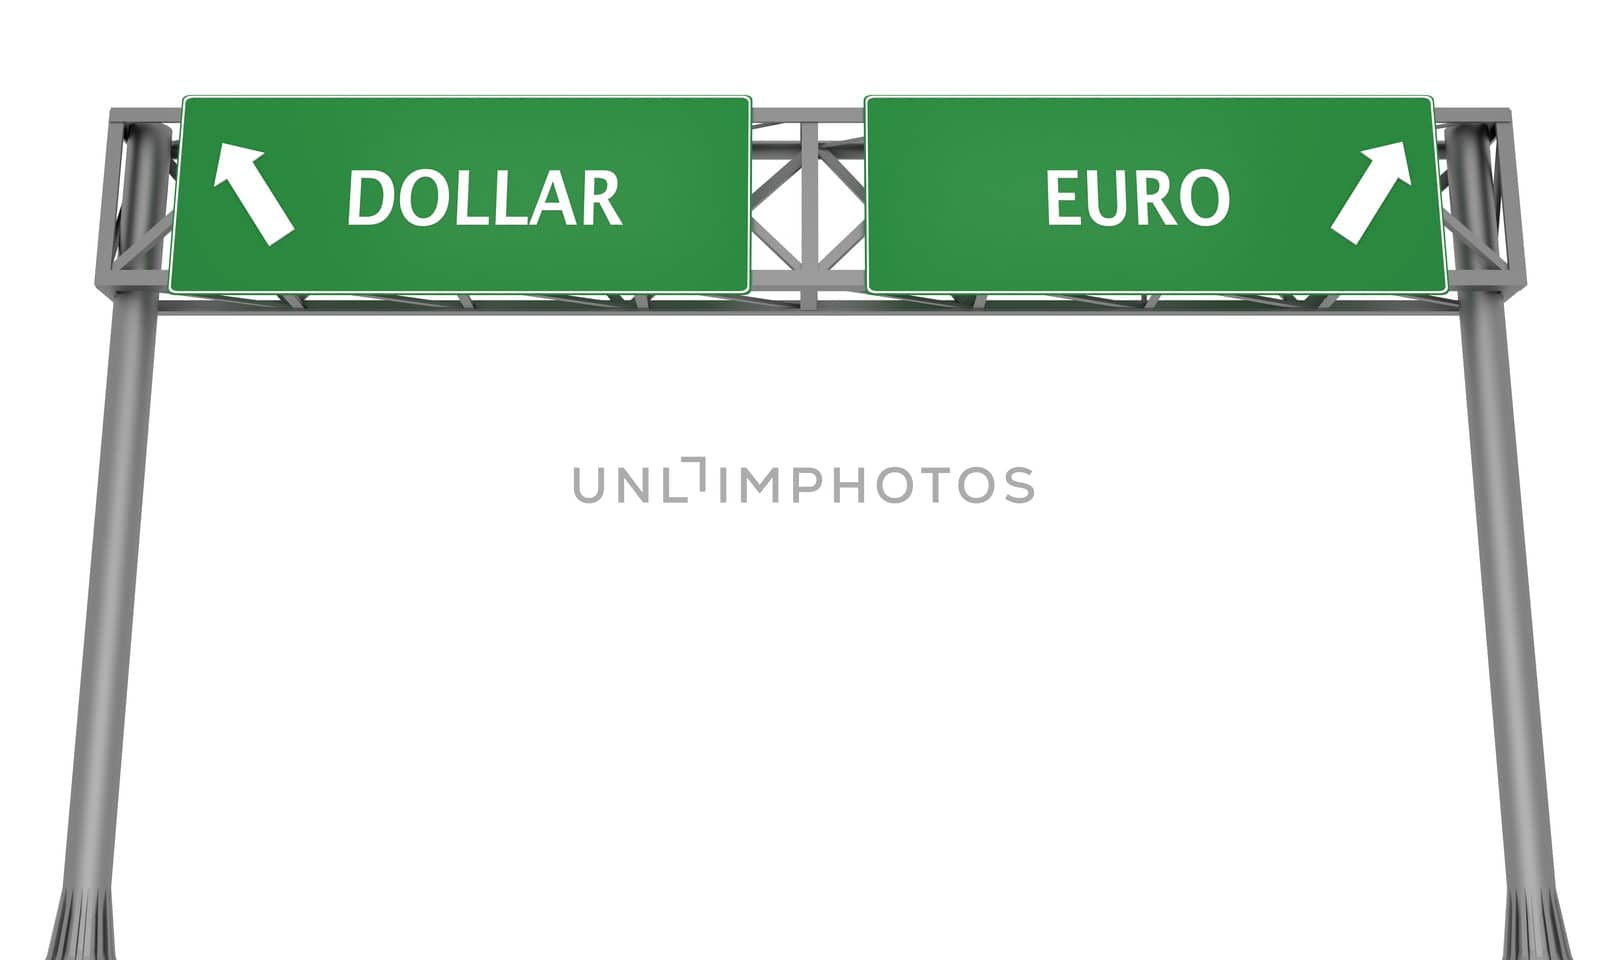 Dollar versus Euro by Harvepino